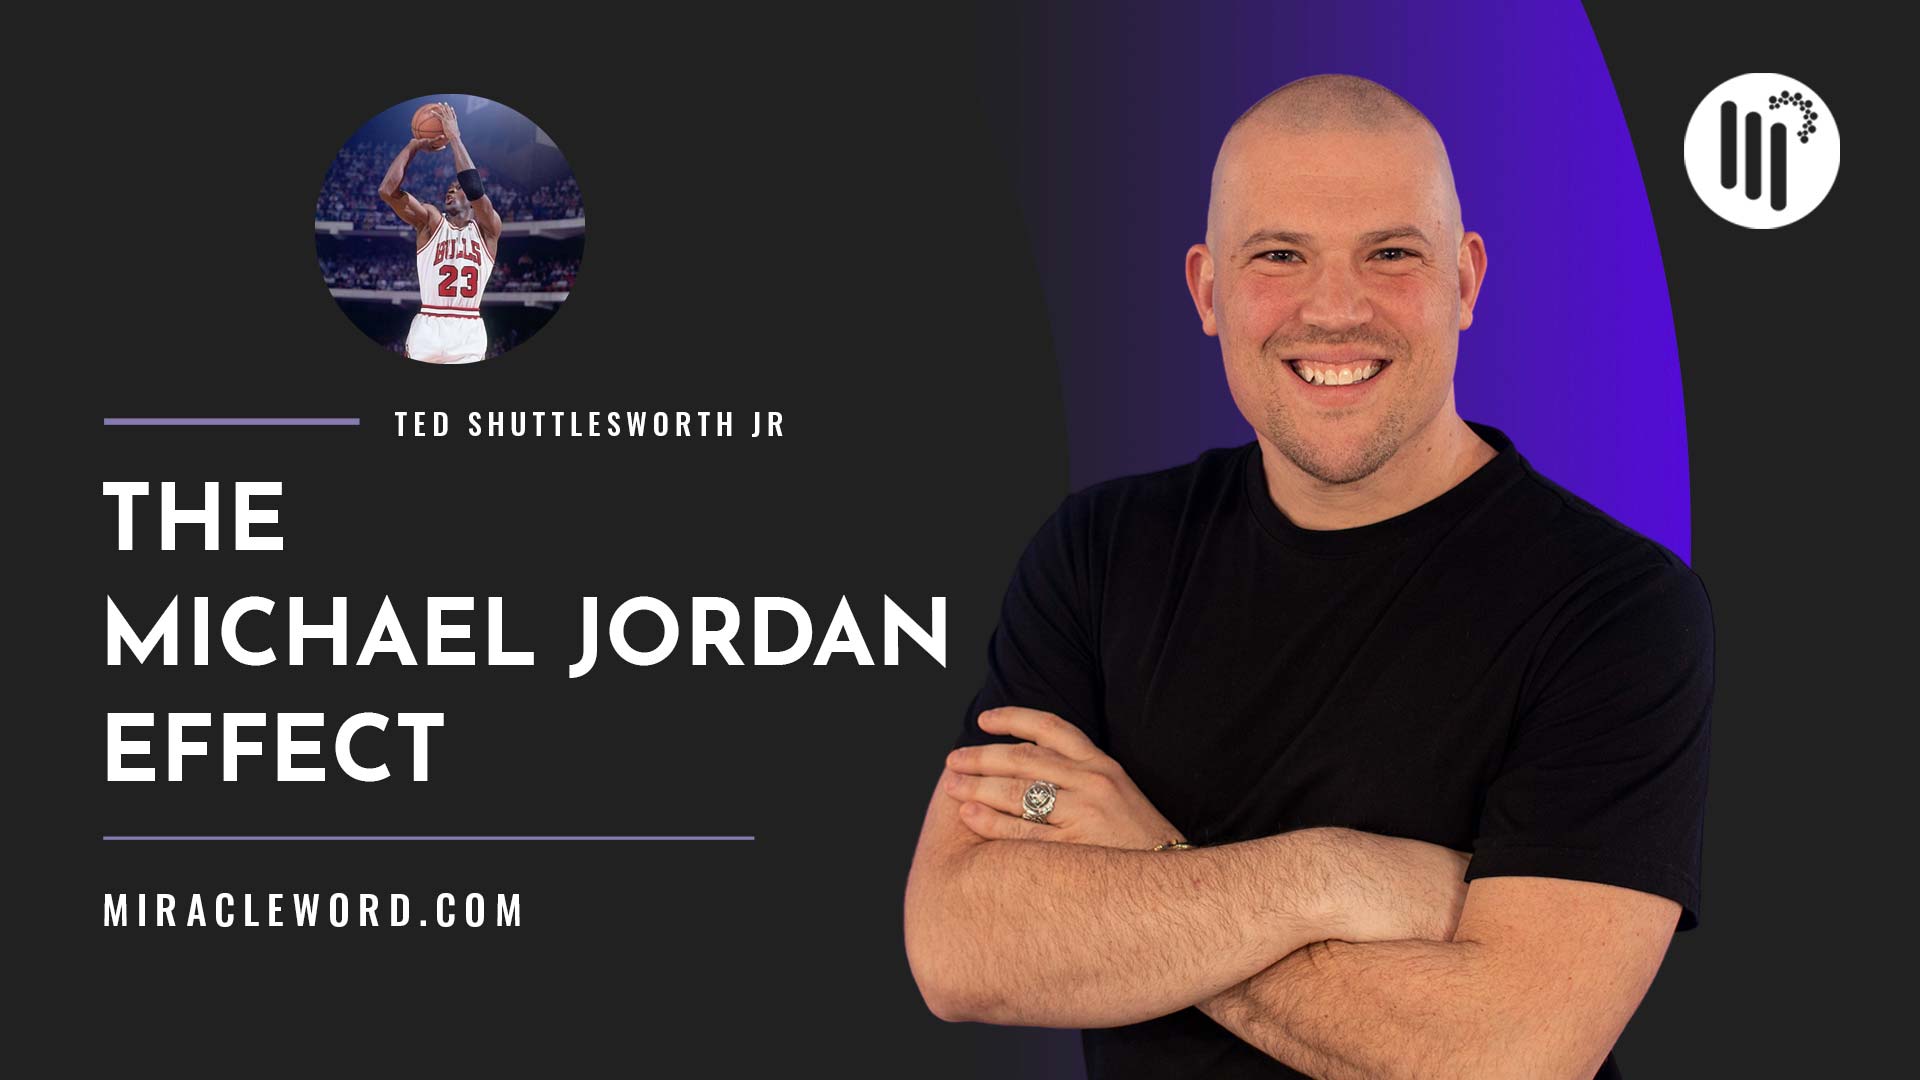 The Michael Jordan effect by Ted Shuttlesworth Jr